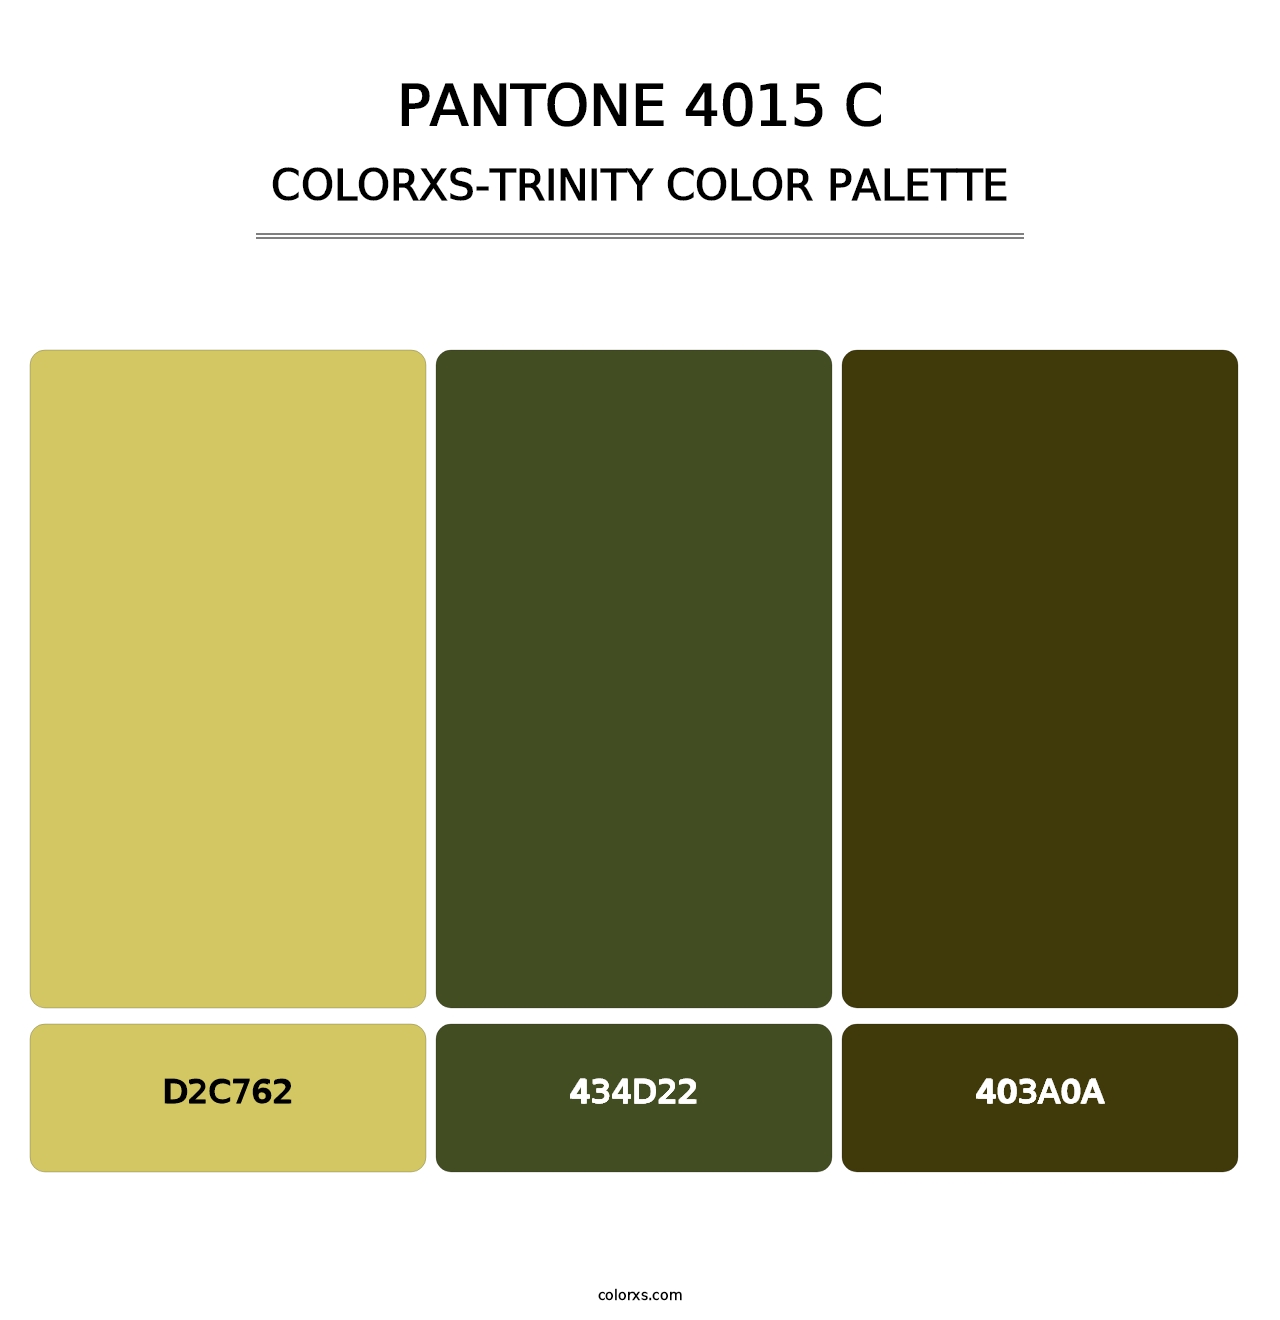 PANTONE 4015 C - Colorxs Trinity Palette